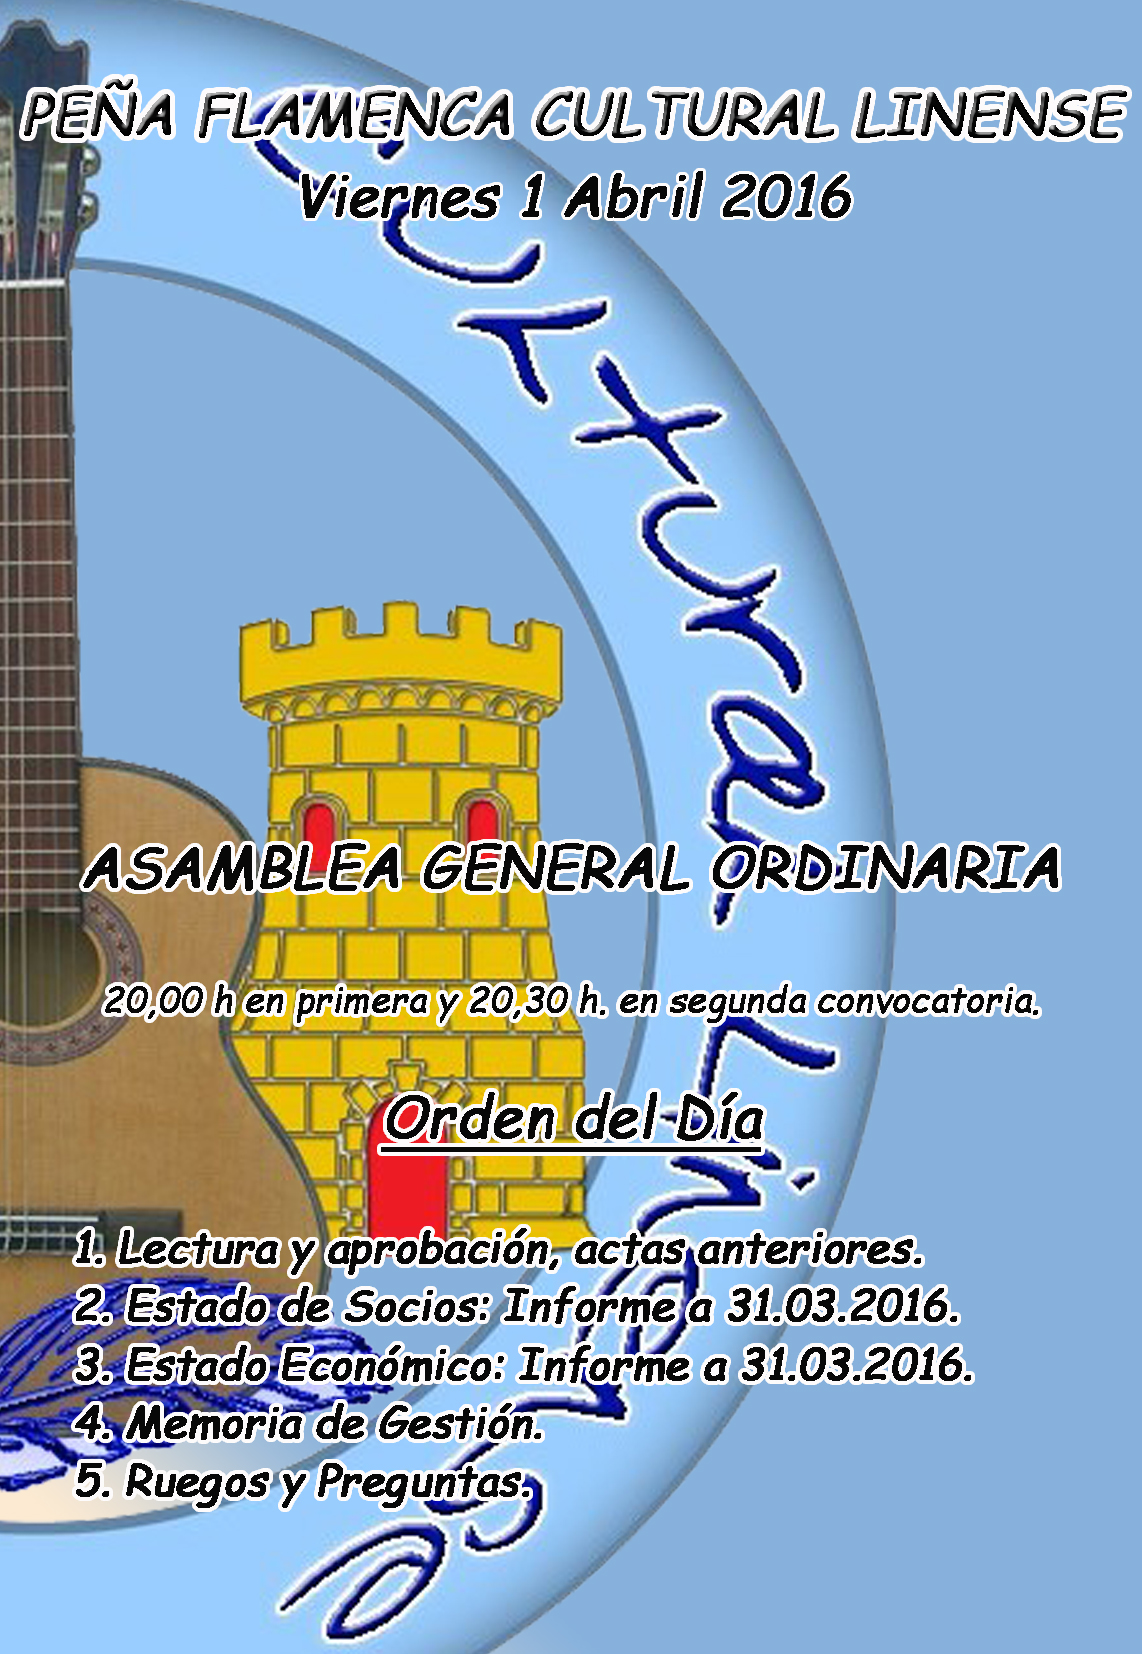 7. ASAMBLEA GENERAL ORDINARIA. 1.04.2016